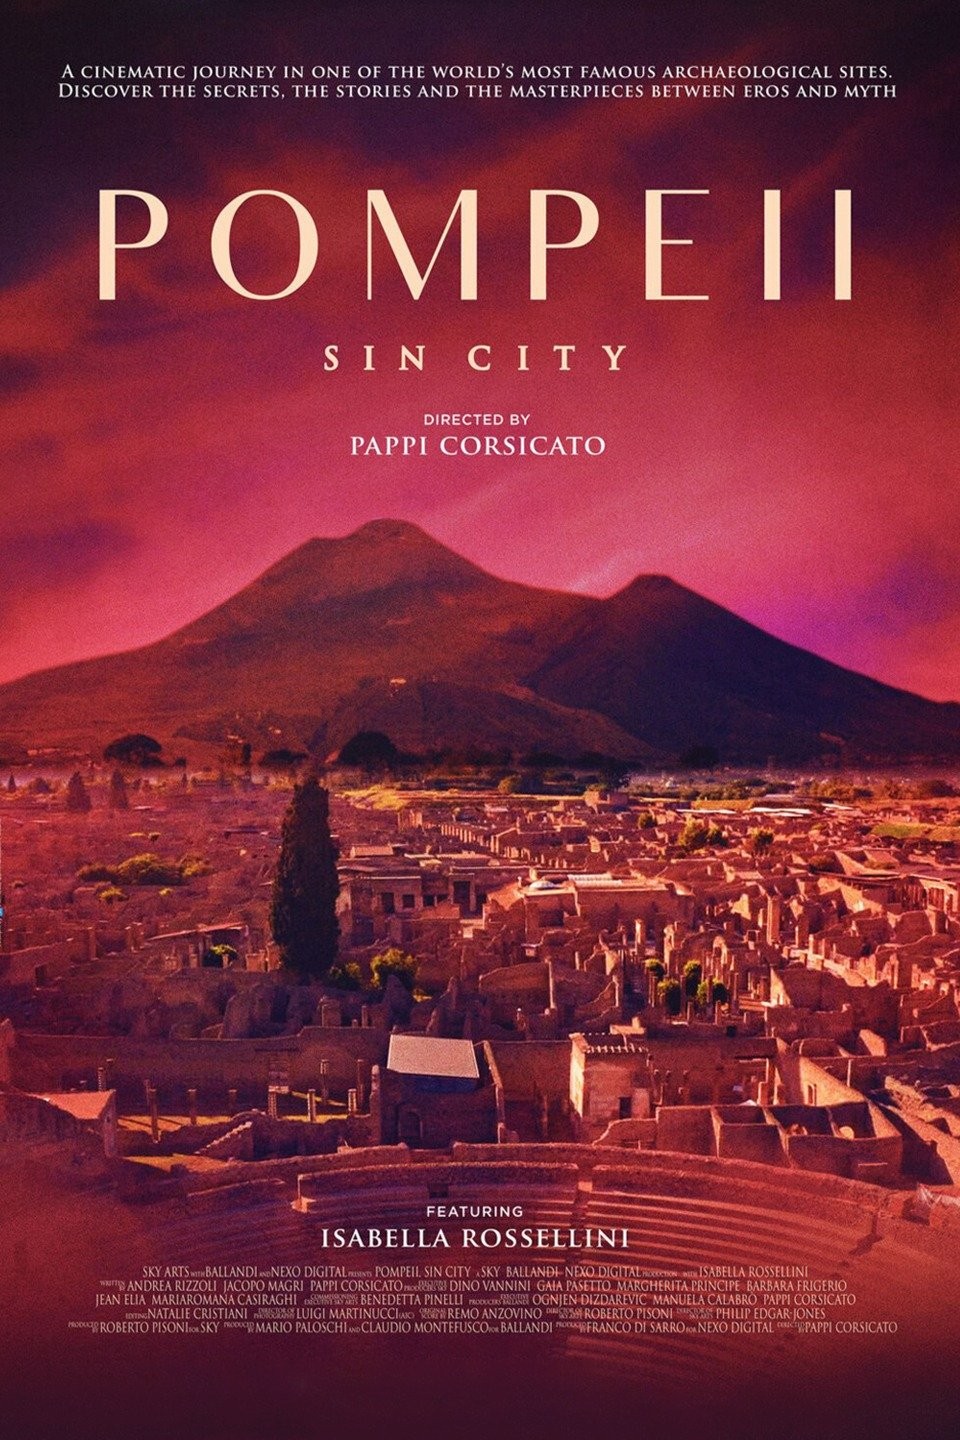 Grazing sheep preserve ancient city of Pompeii | Sky News Australia